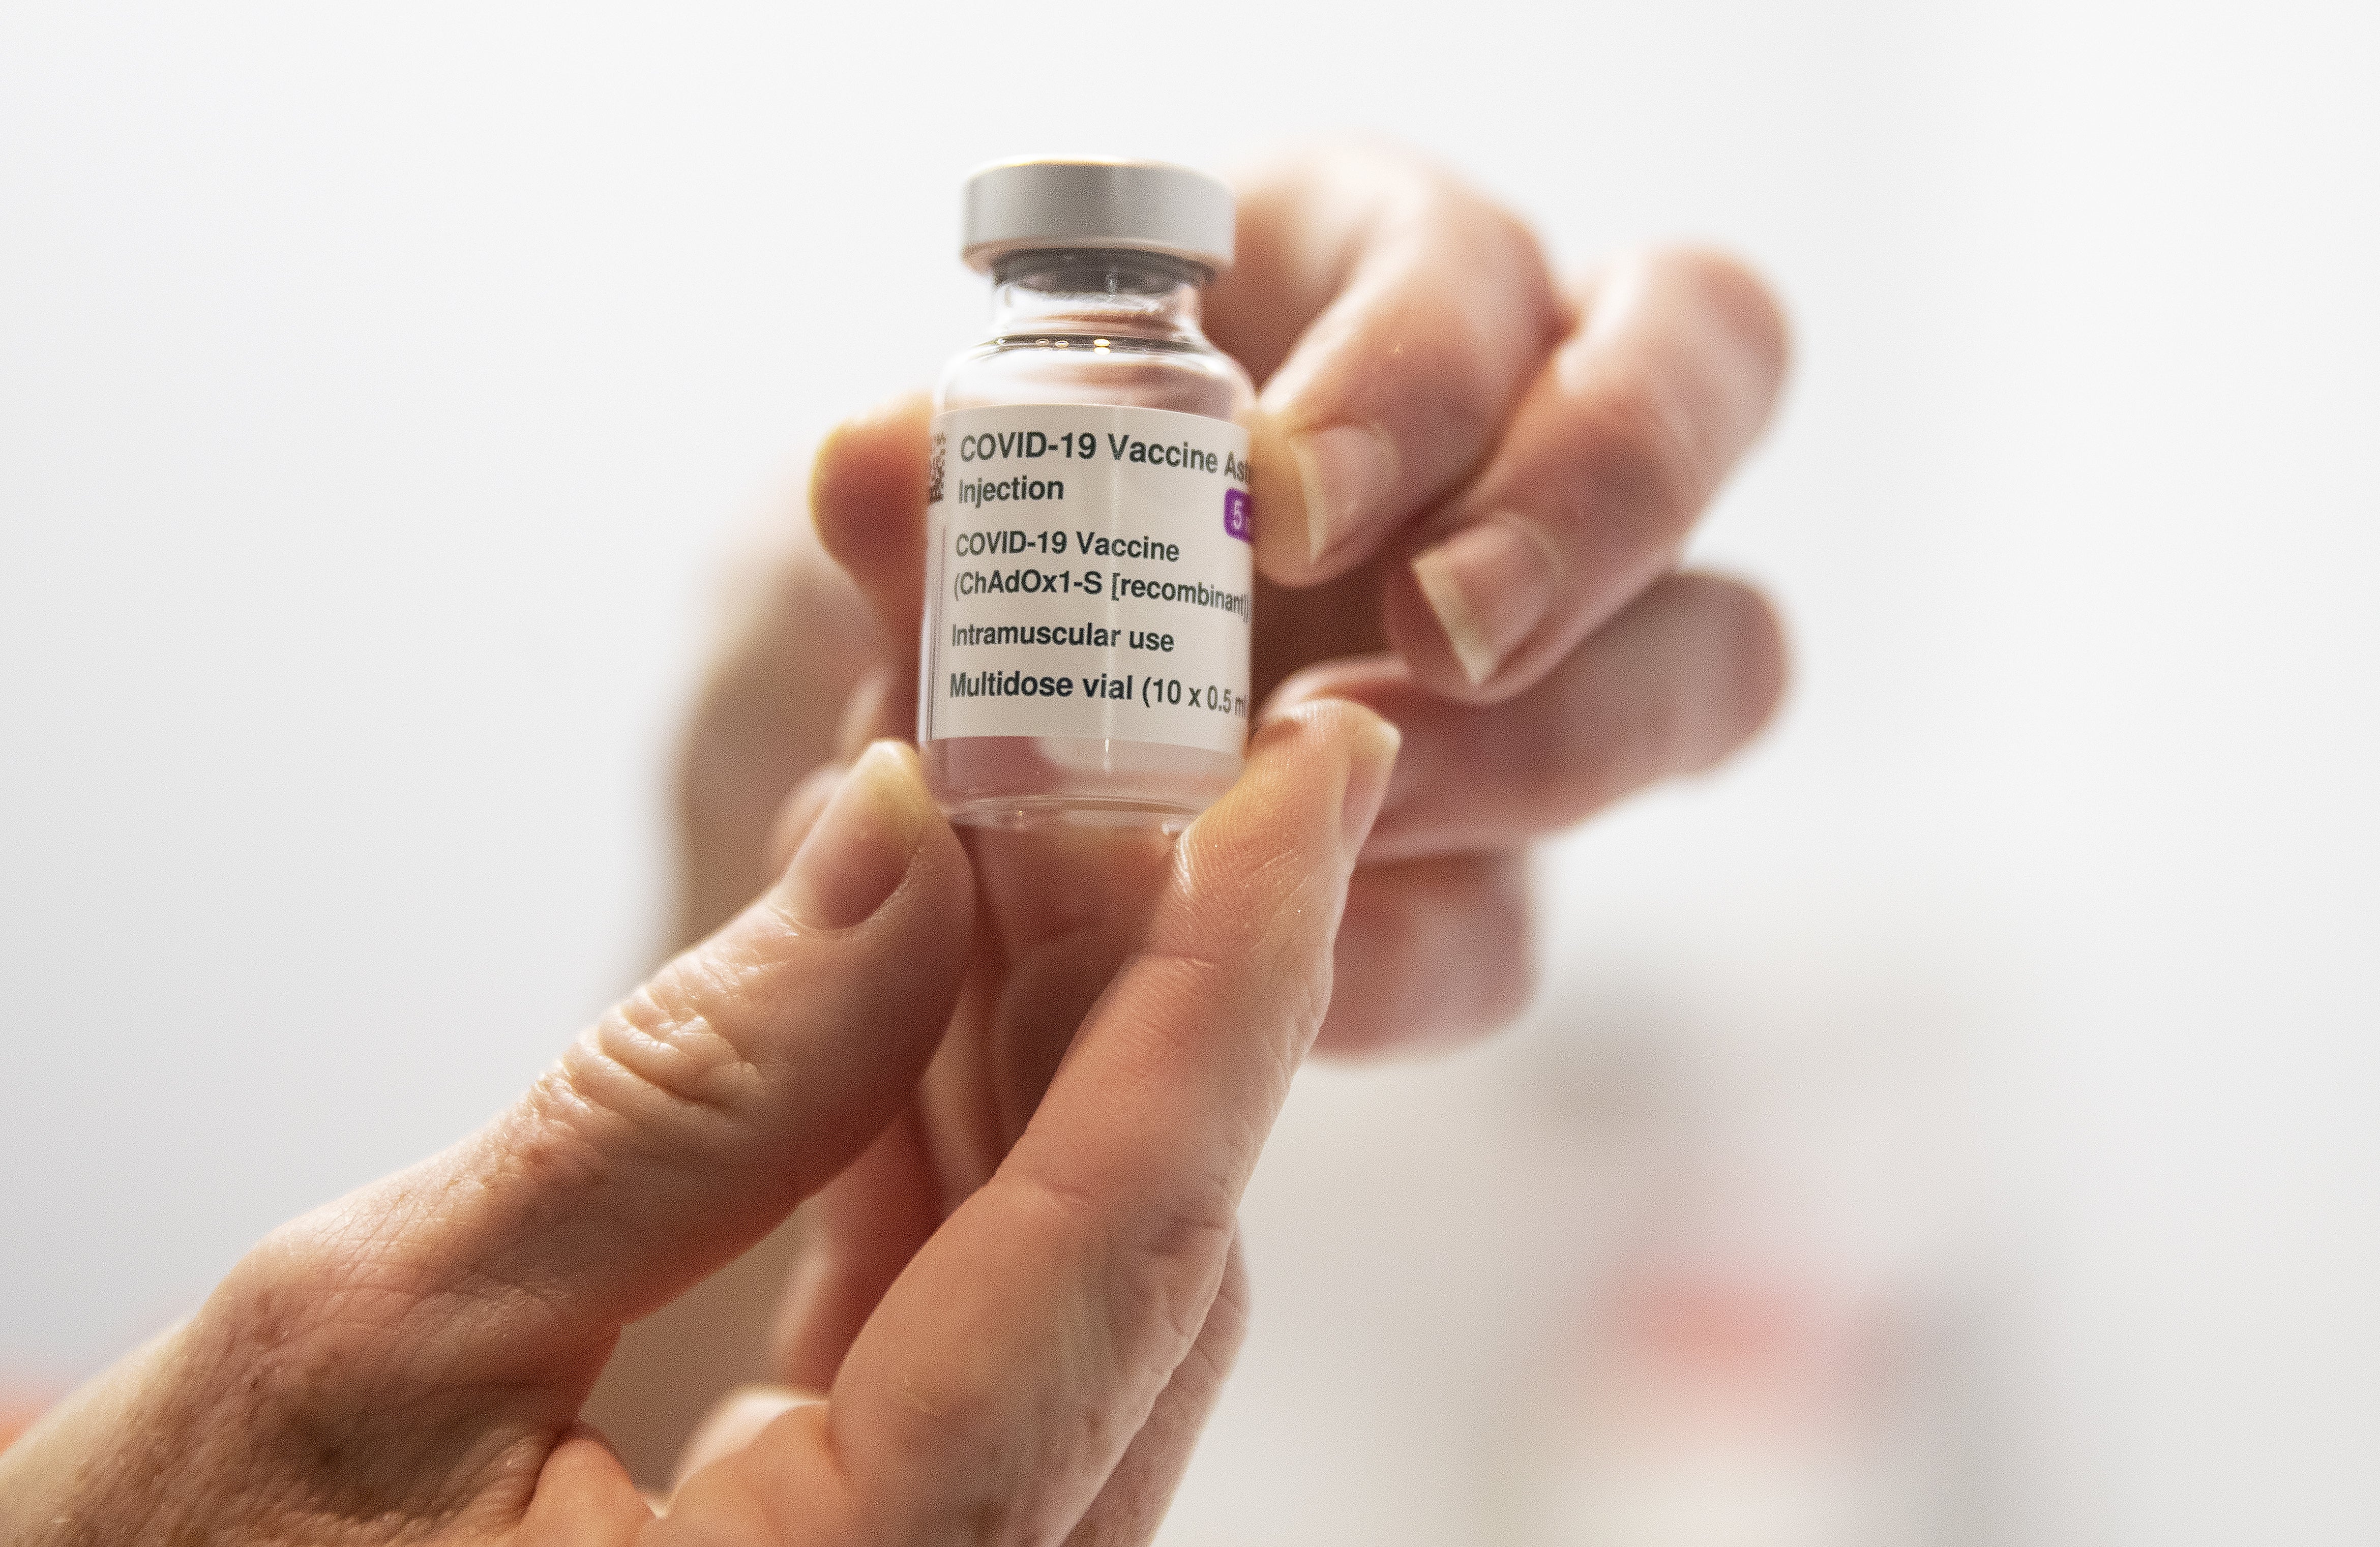 Sales of AstraZeneca’s Covid-19 vaccine have soared to 1.2 billion US dollars (Brian Lawless/PA)